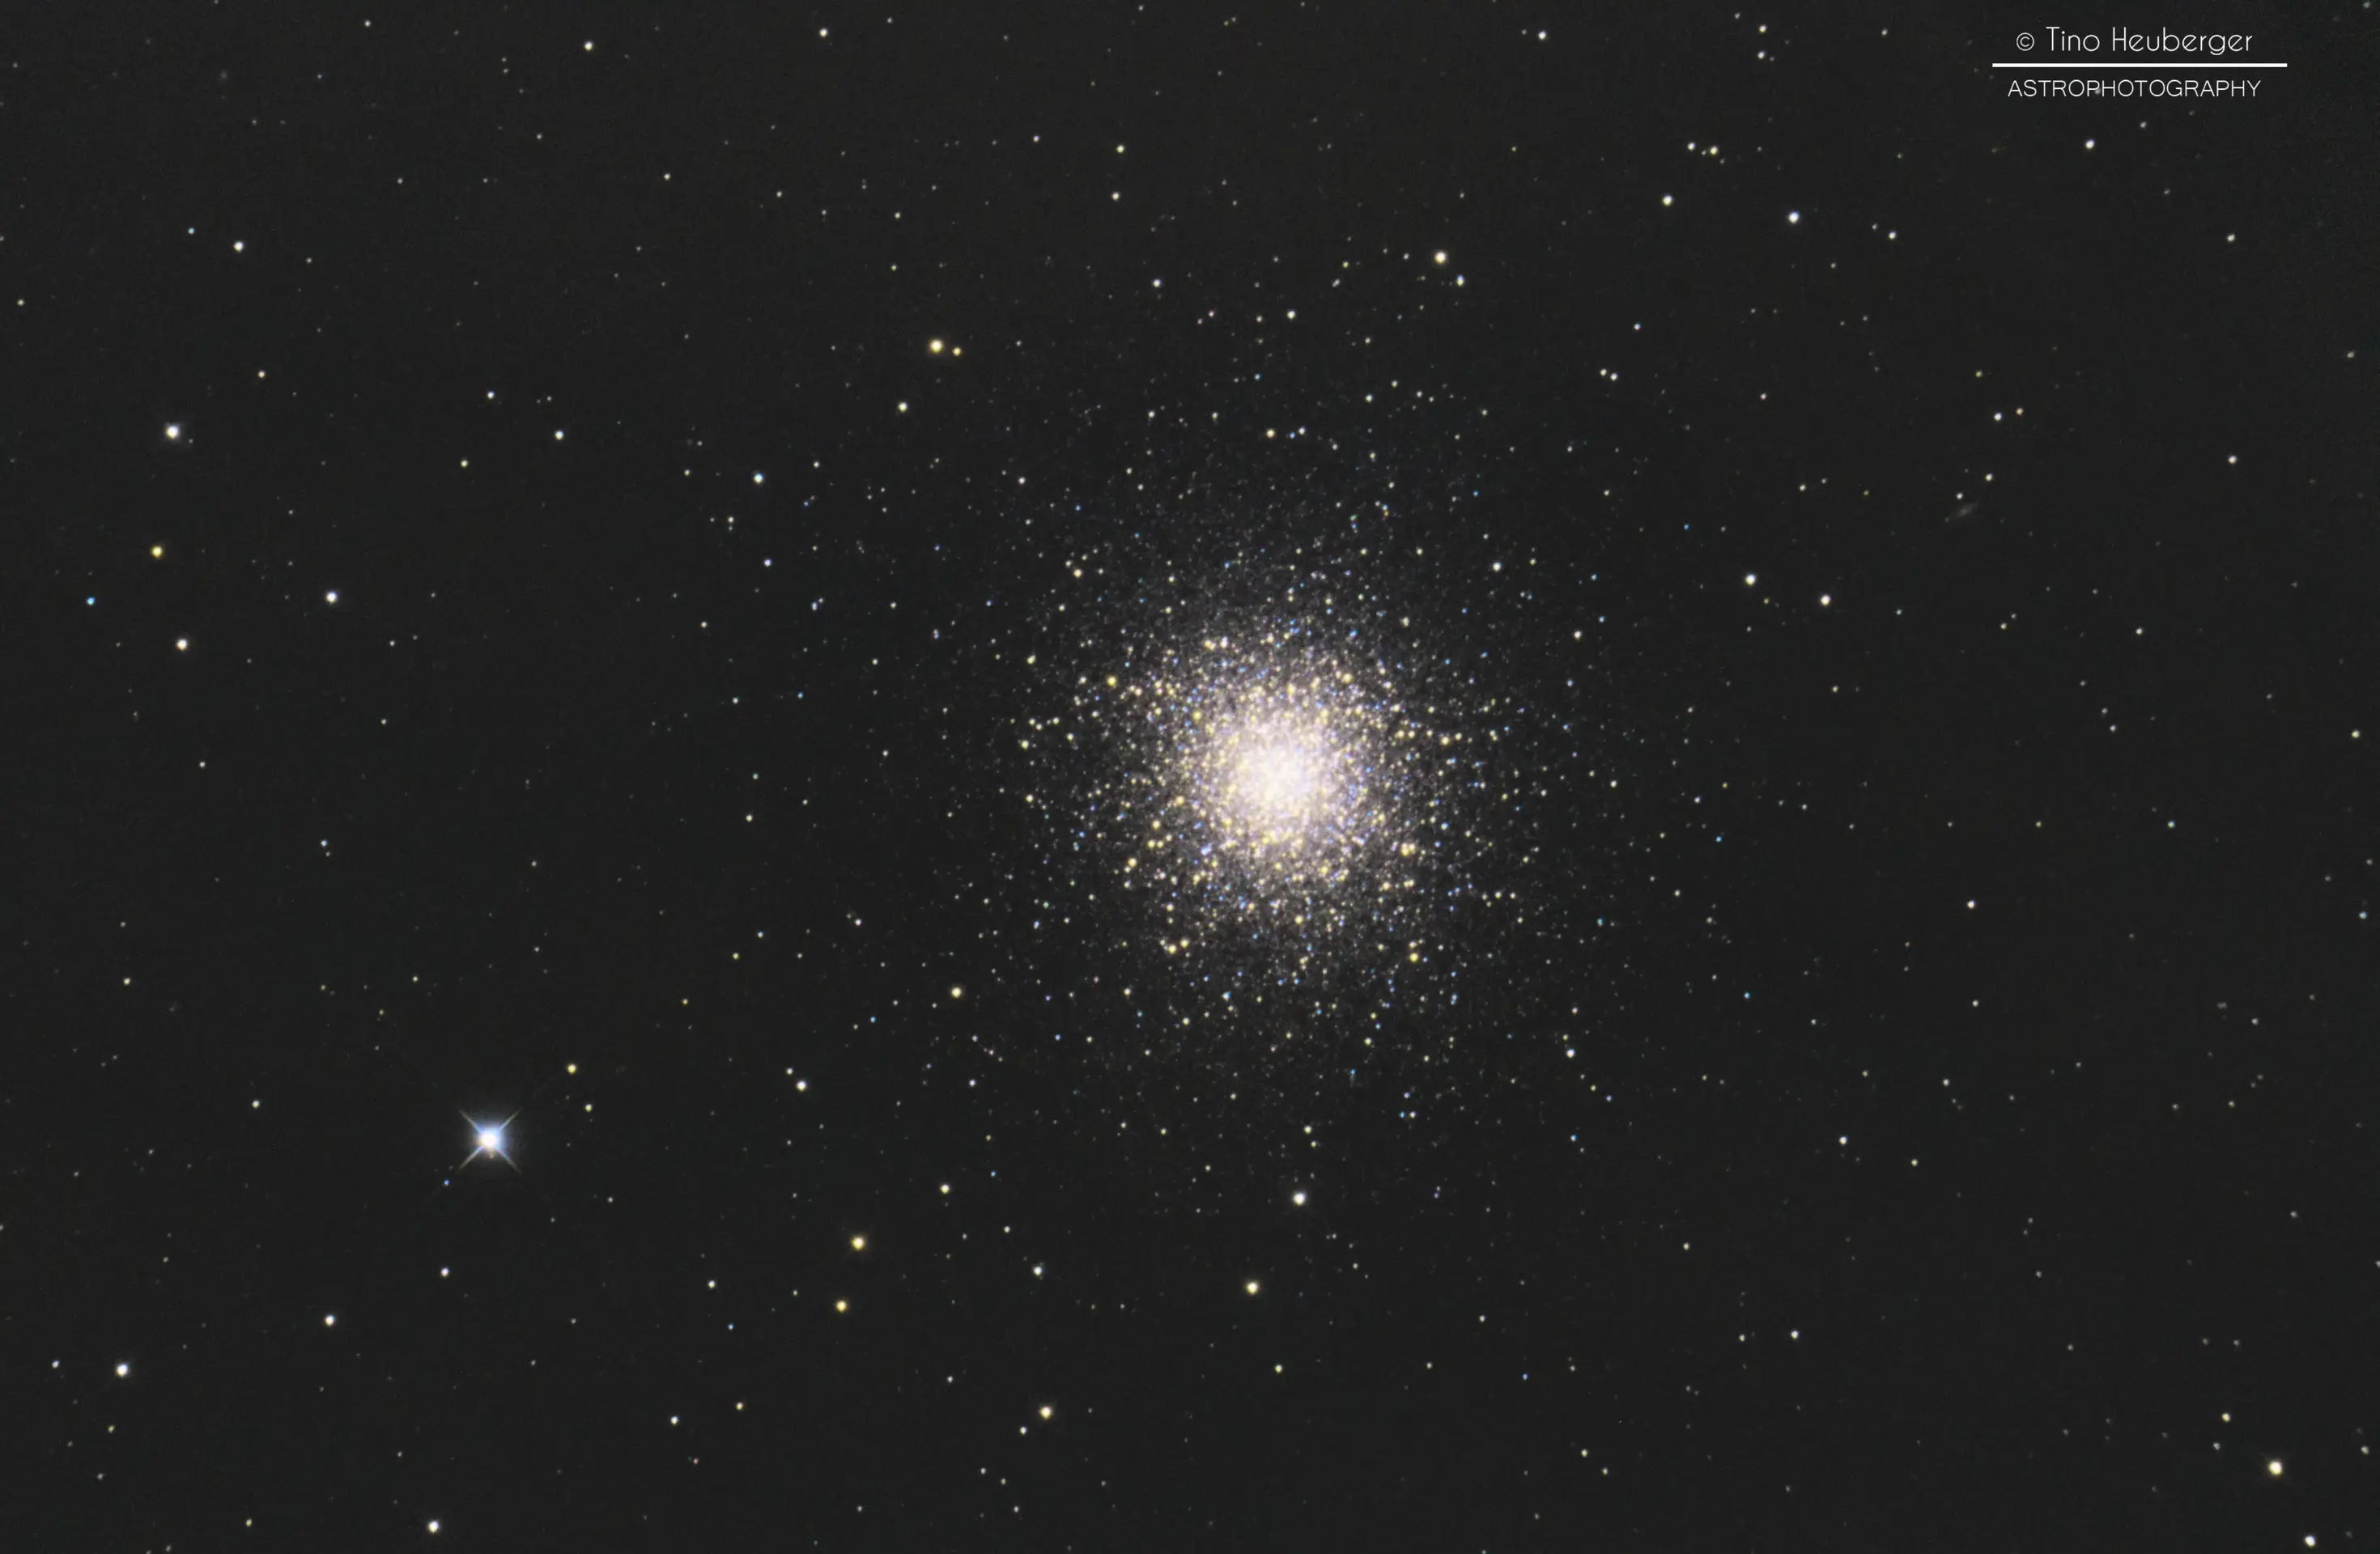 M13: The Hercules star cluster